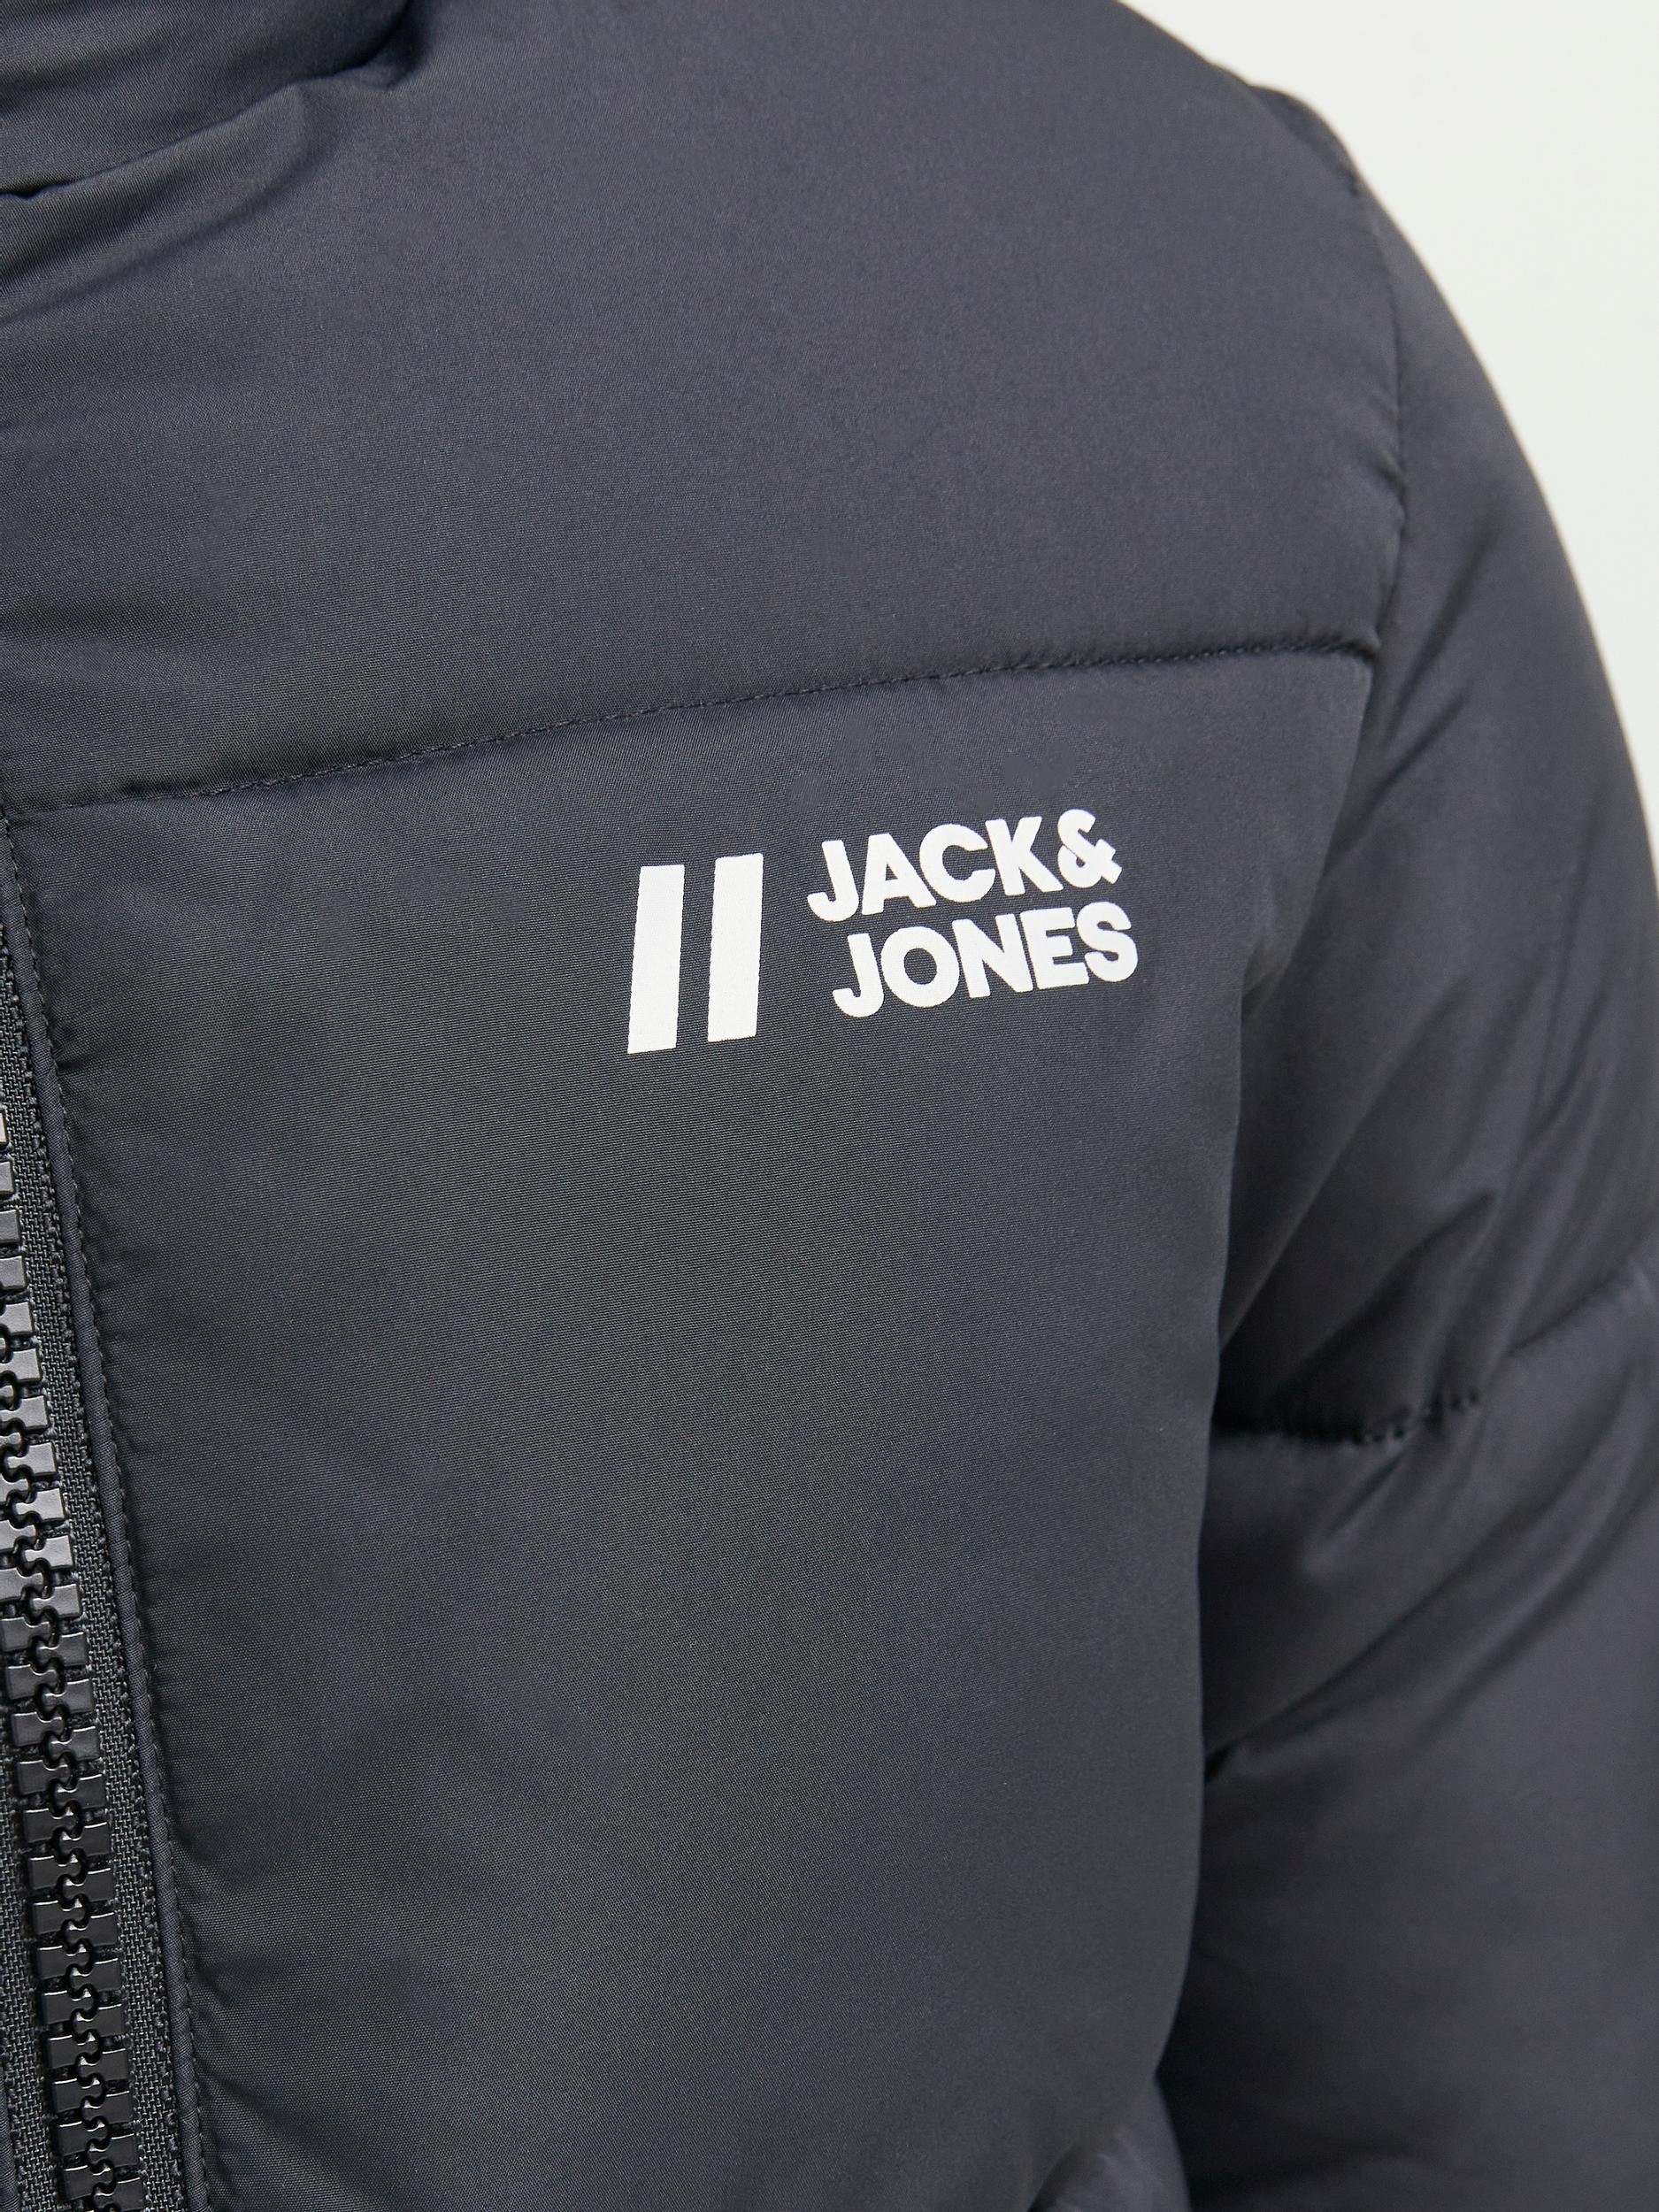 Jones Jack & Junior Steppjacke Black